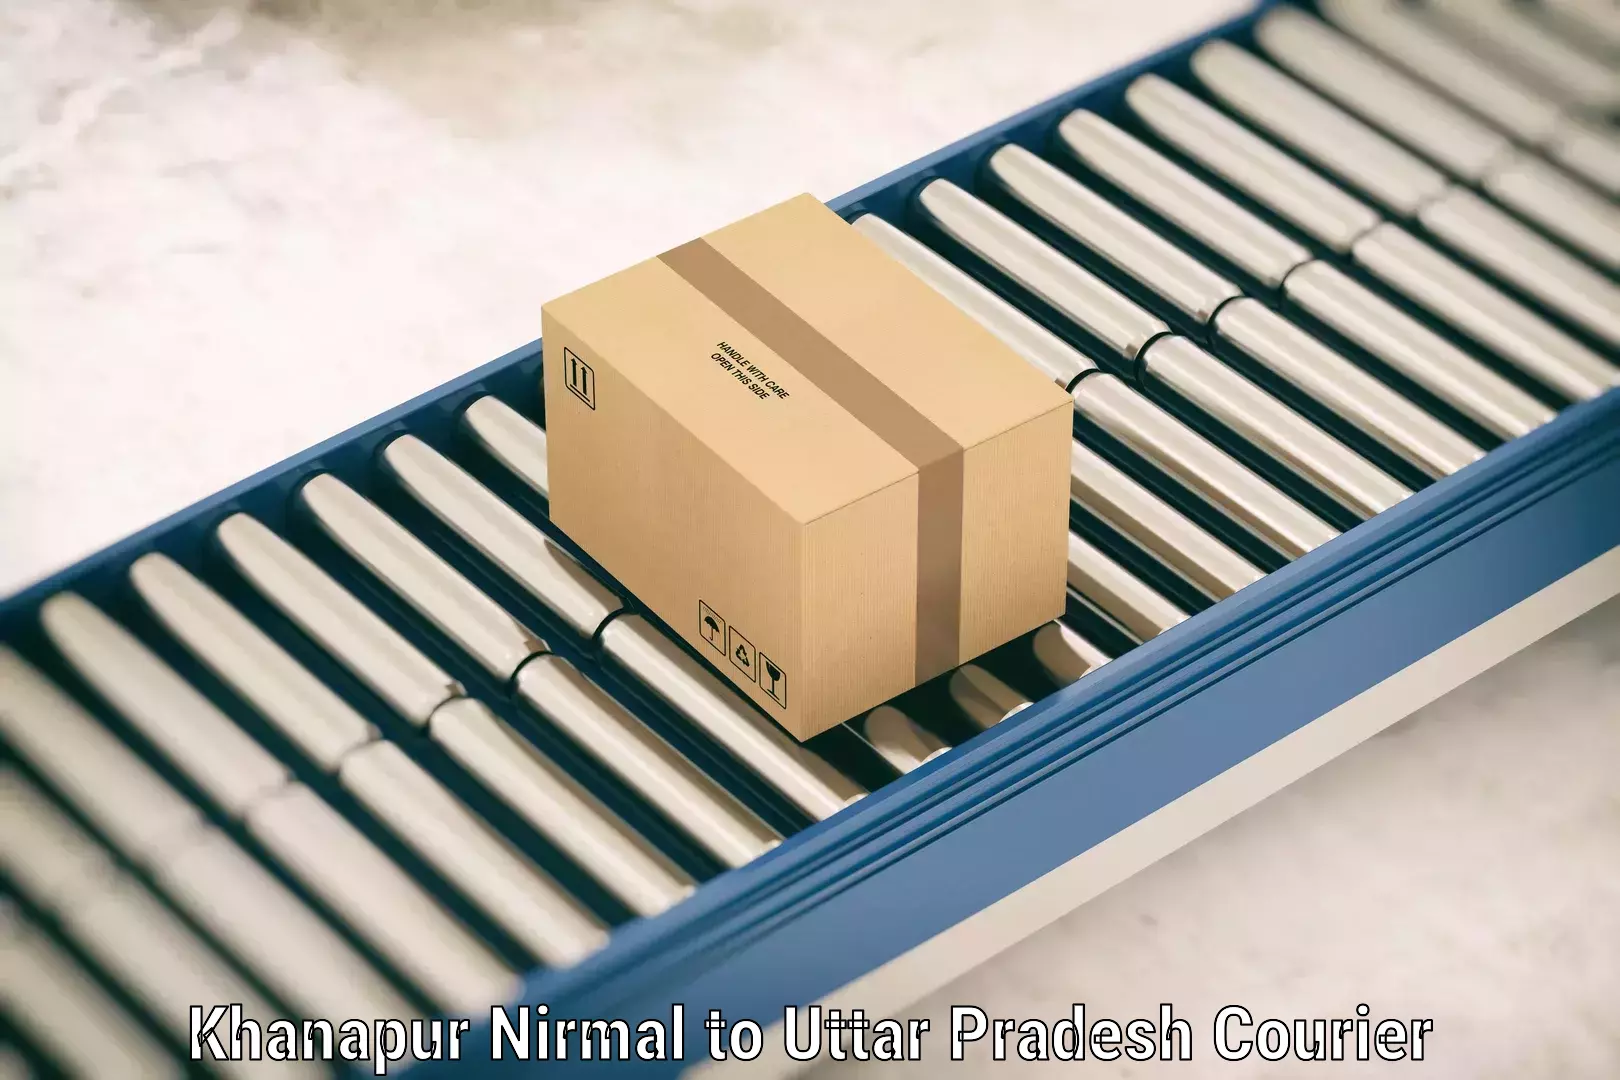 Luggage delivery network Khanapur Nirmal to Gahmar